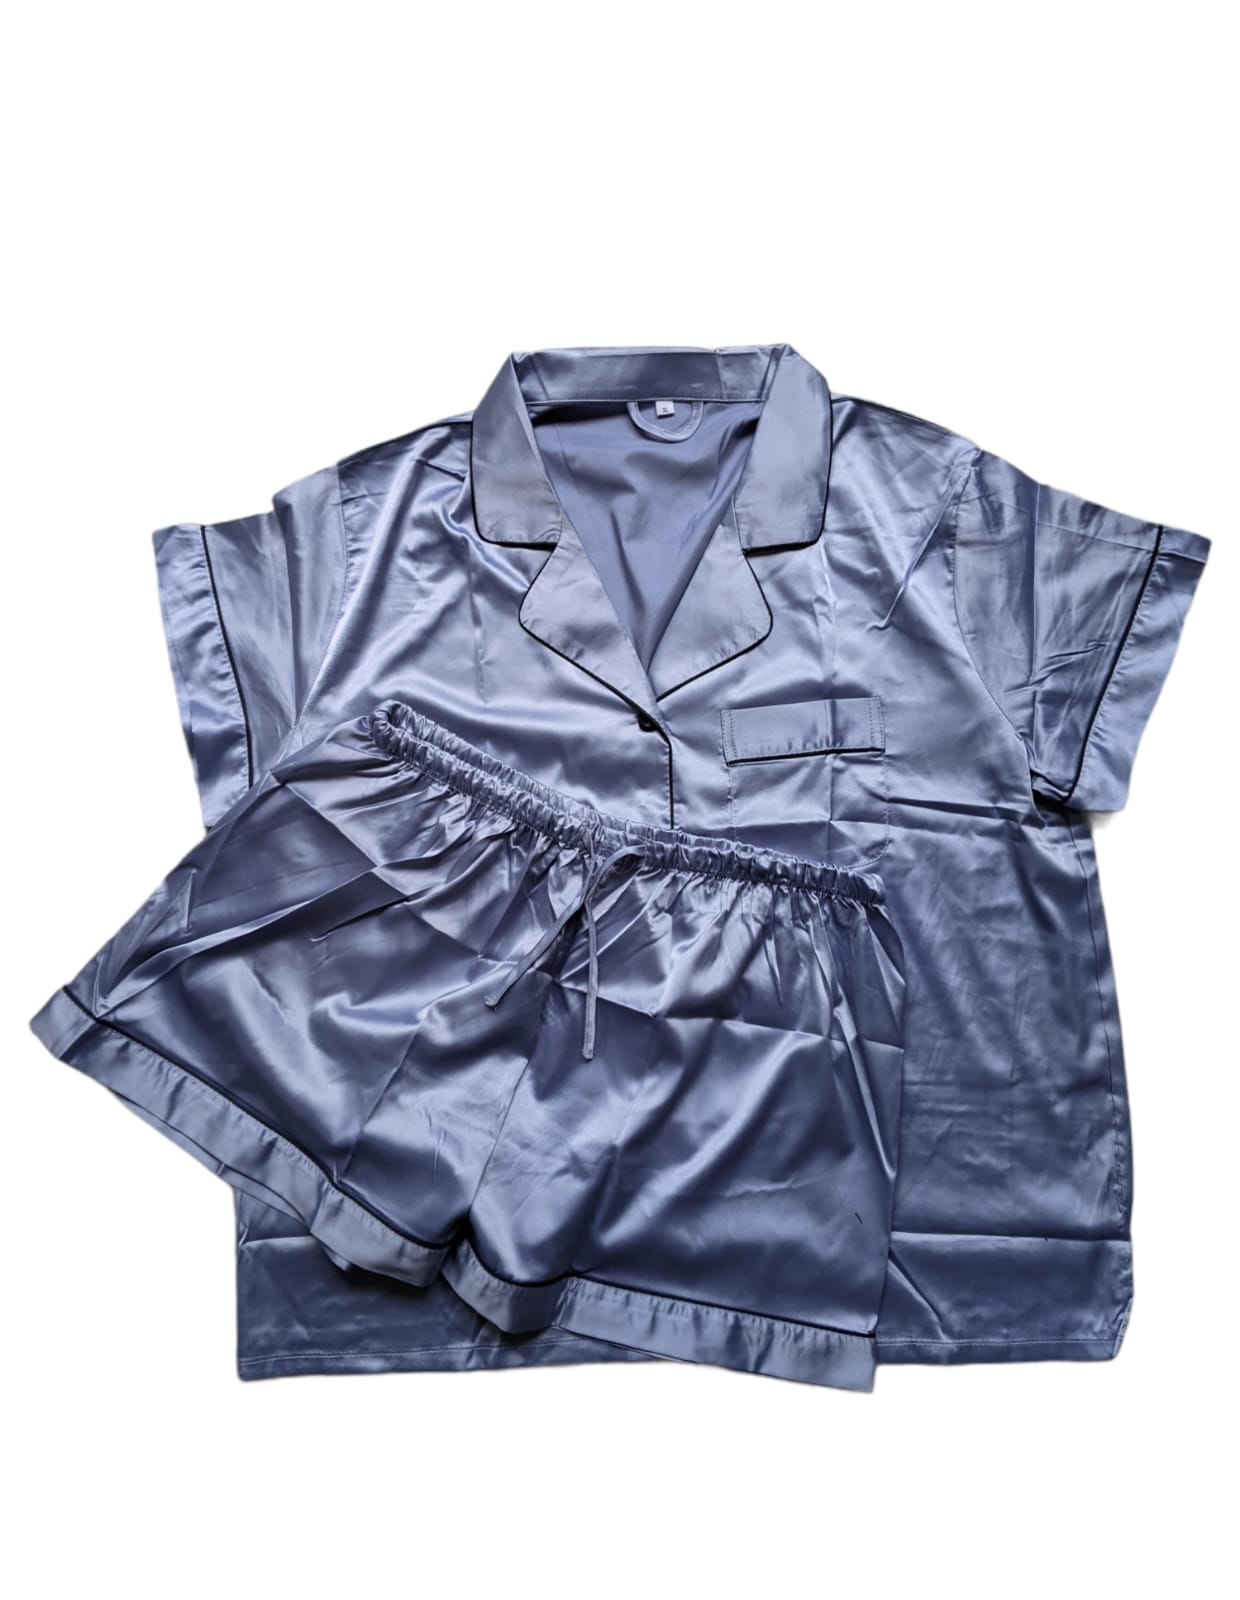 Satin Personalised Pyjama Set - Dusty Blue and Black